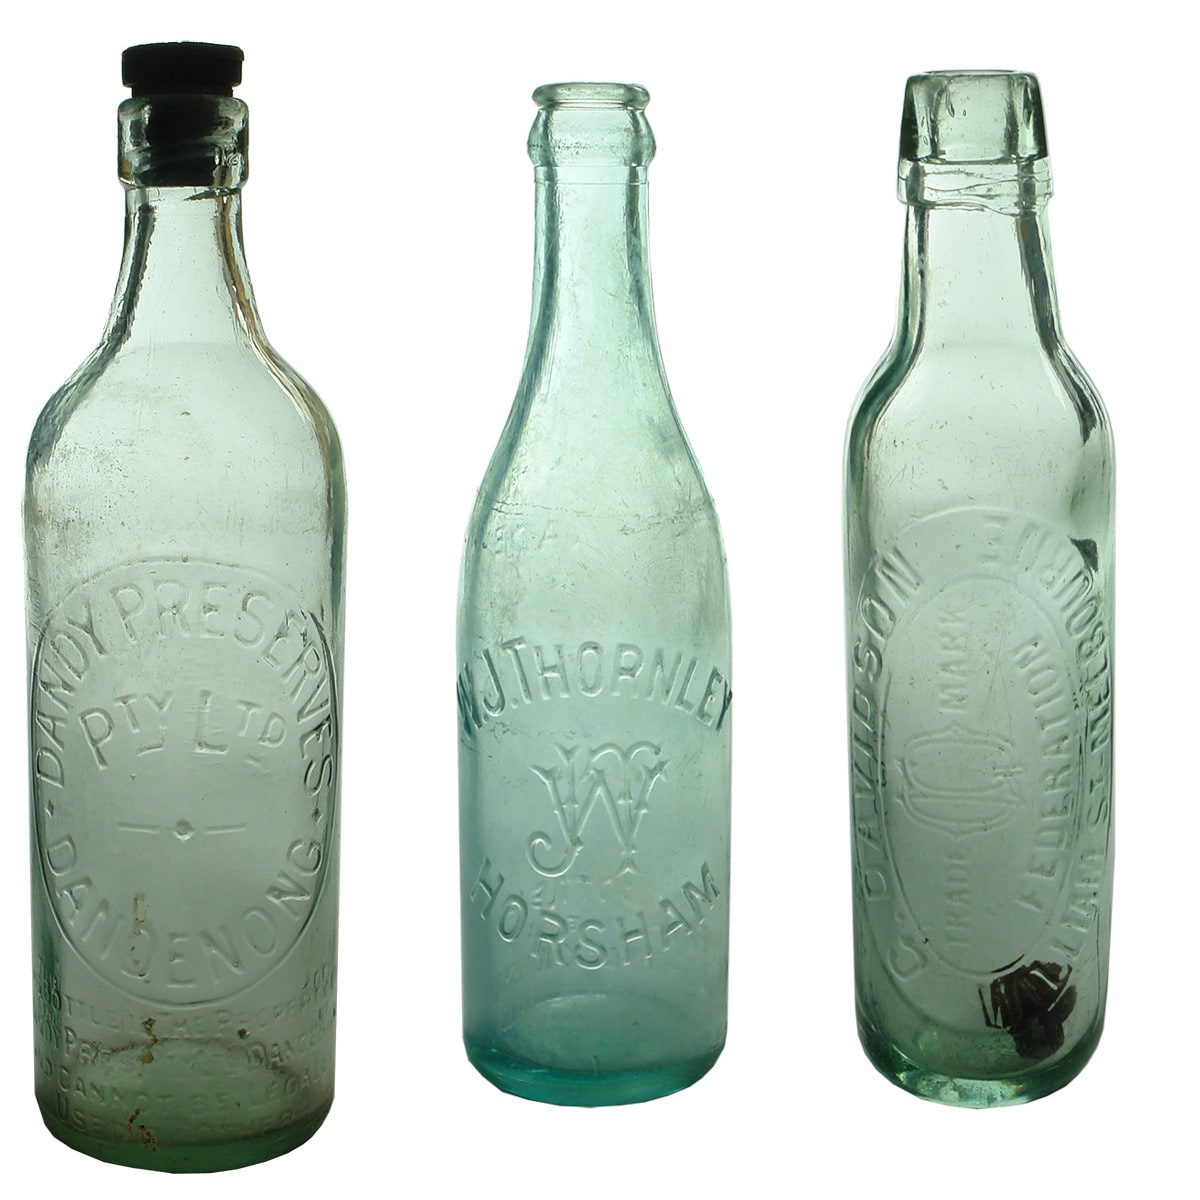 3 Aerated Water Bottles. Dandy Preserves Pty Ltd, Dandenong. Machine top; W. J. Thornley, Horsham Crown Seal; G. Davidson, Federation, Melbourne Lamont. (Victoria)